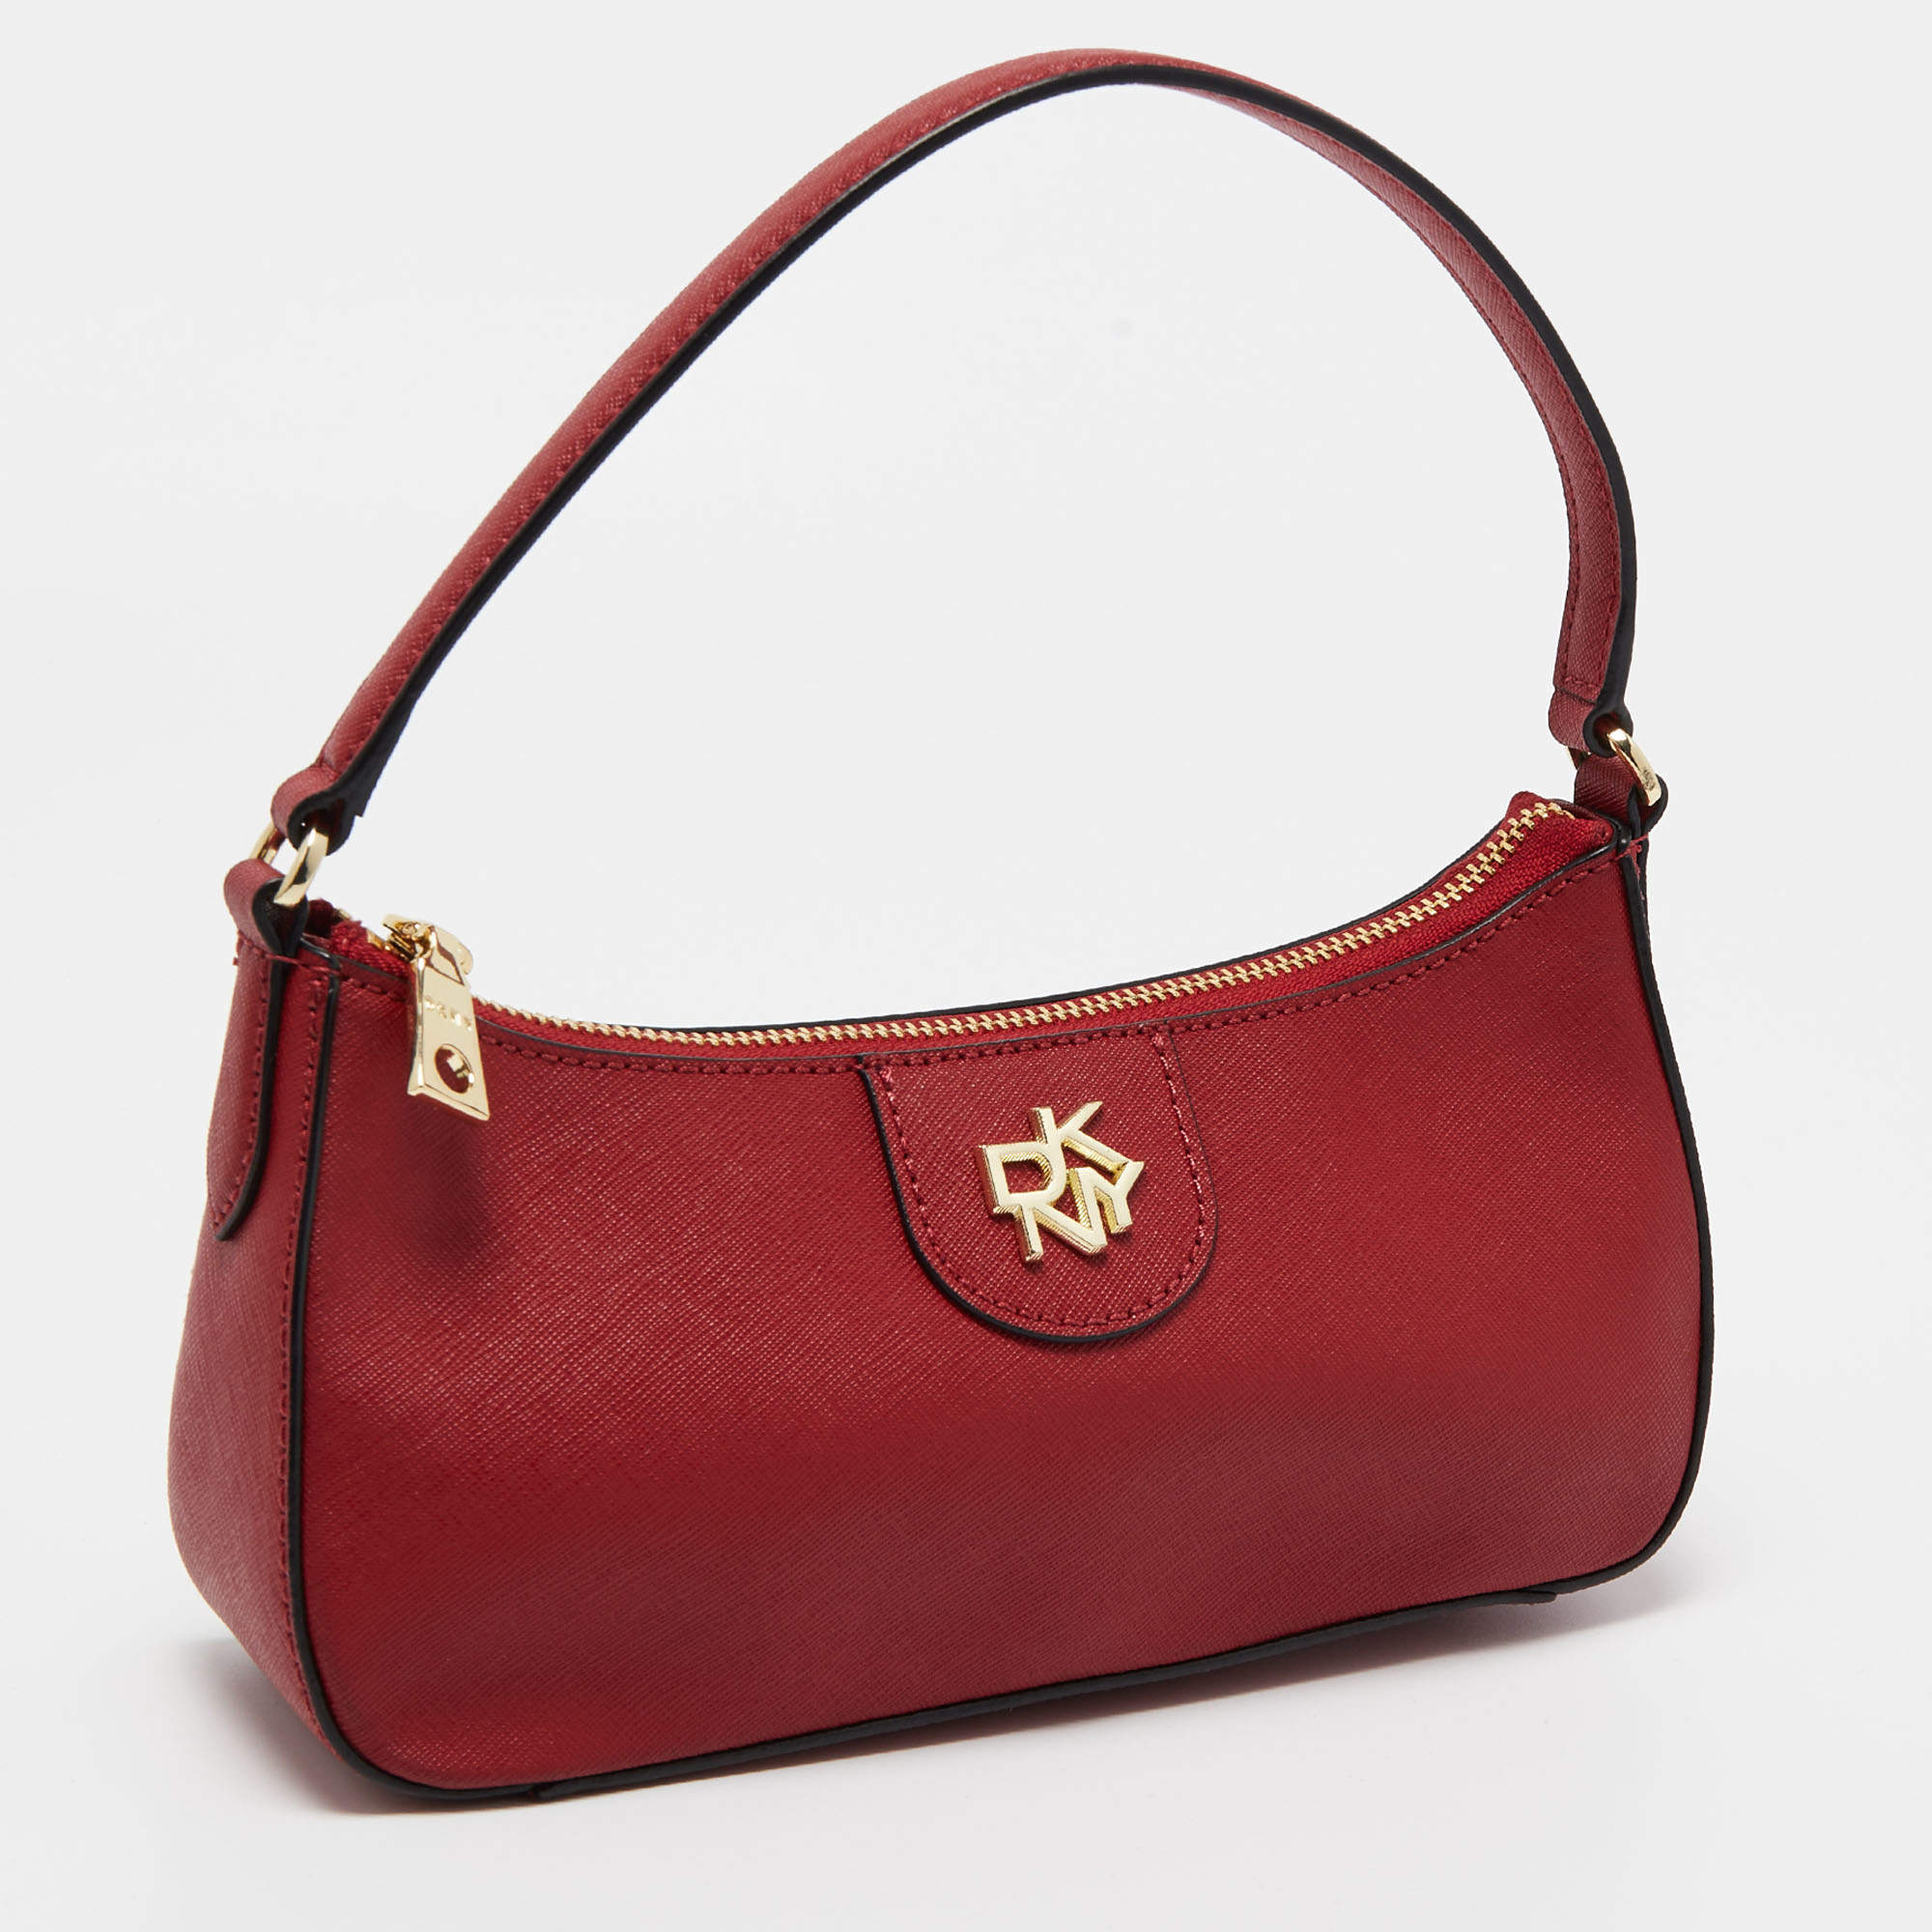 Carol handbag by DKNY